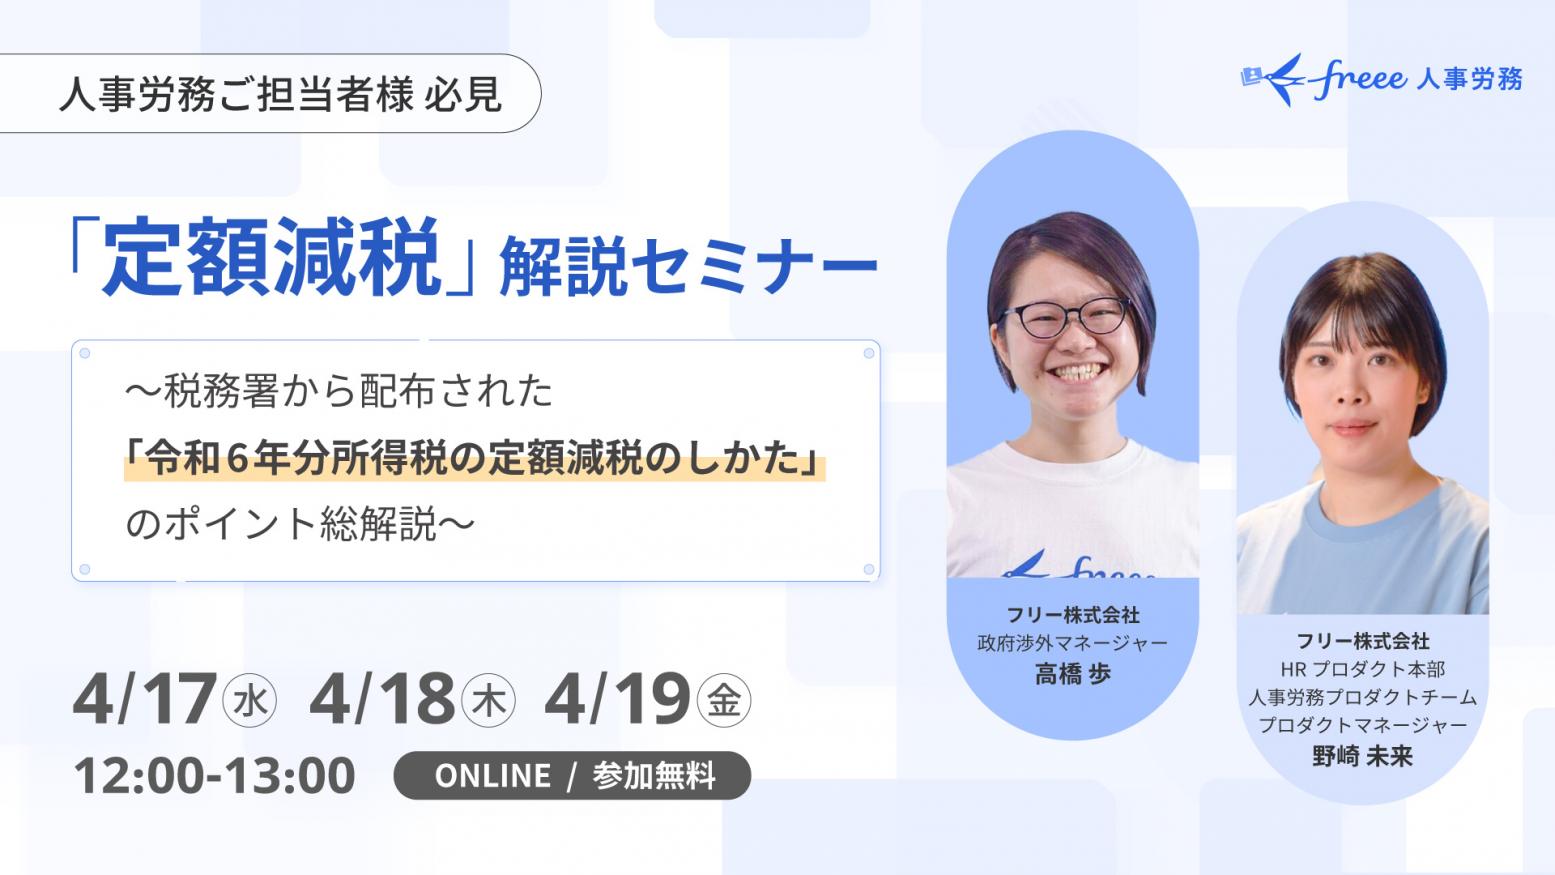 freee人事労務、4月17日・18日・19日の3日間「定額減税解説セミナー」をオンラインで開催